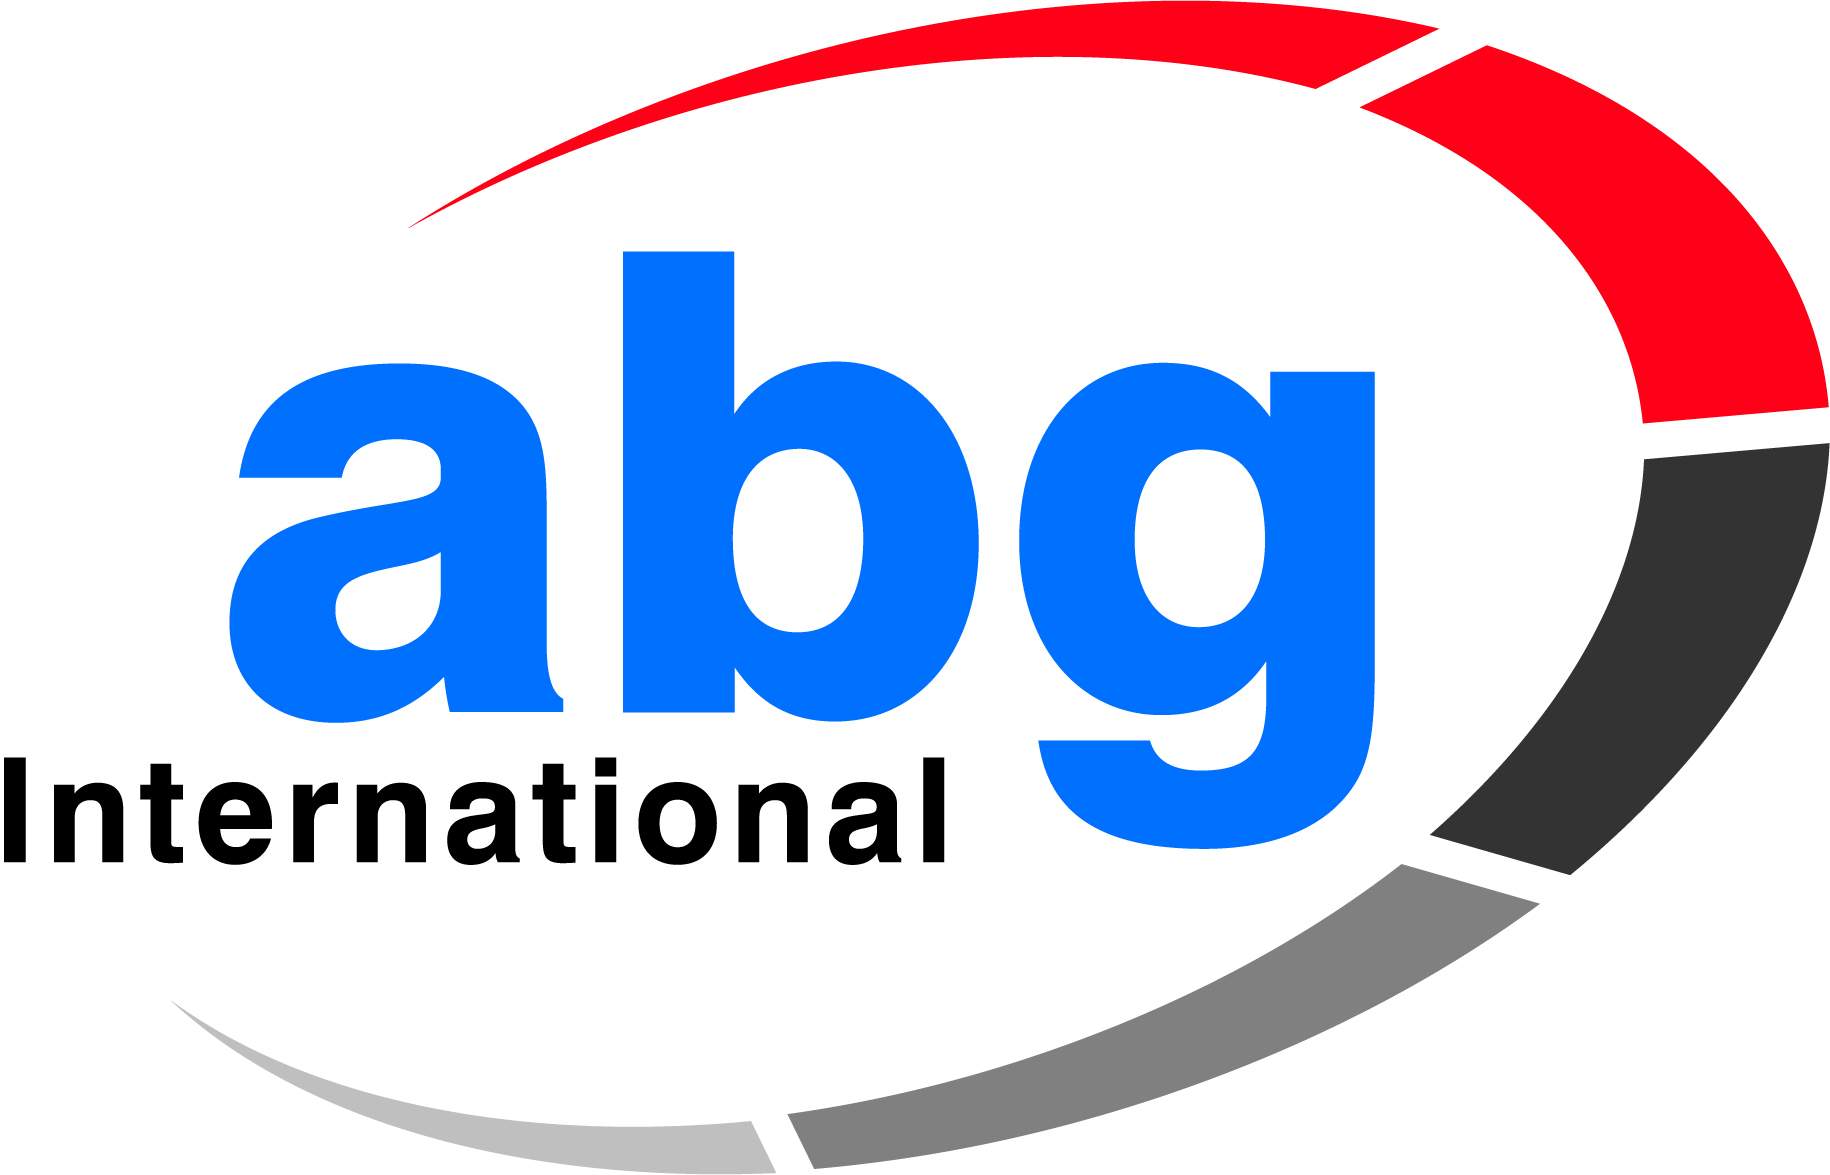 Graphic int. Abg logo. Inco логотип. 5.11 Интернейшинал лейбл. Premium International holding Ltd.